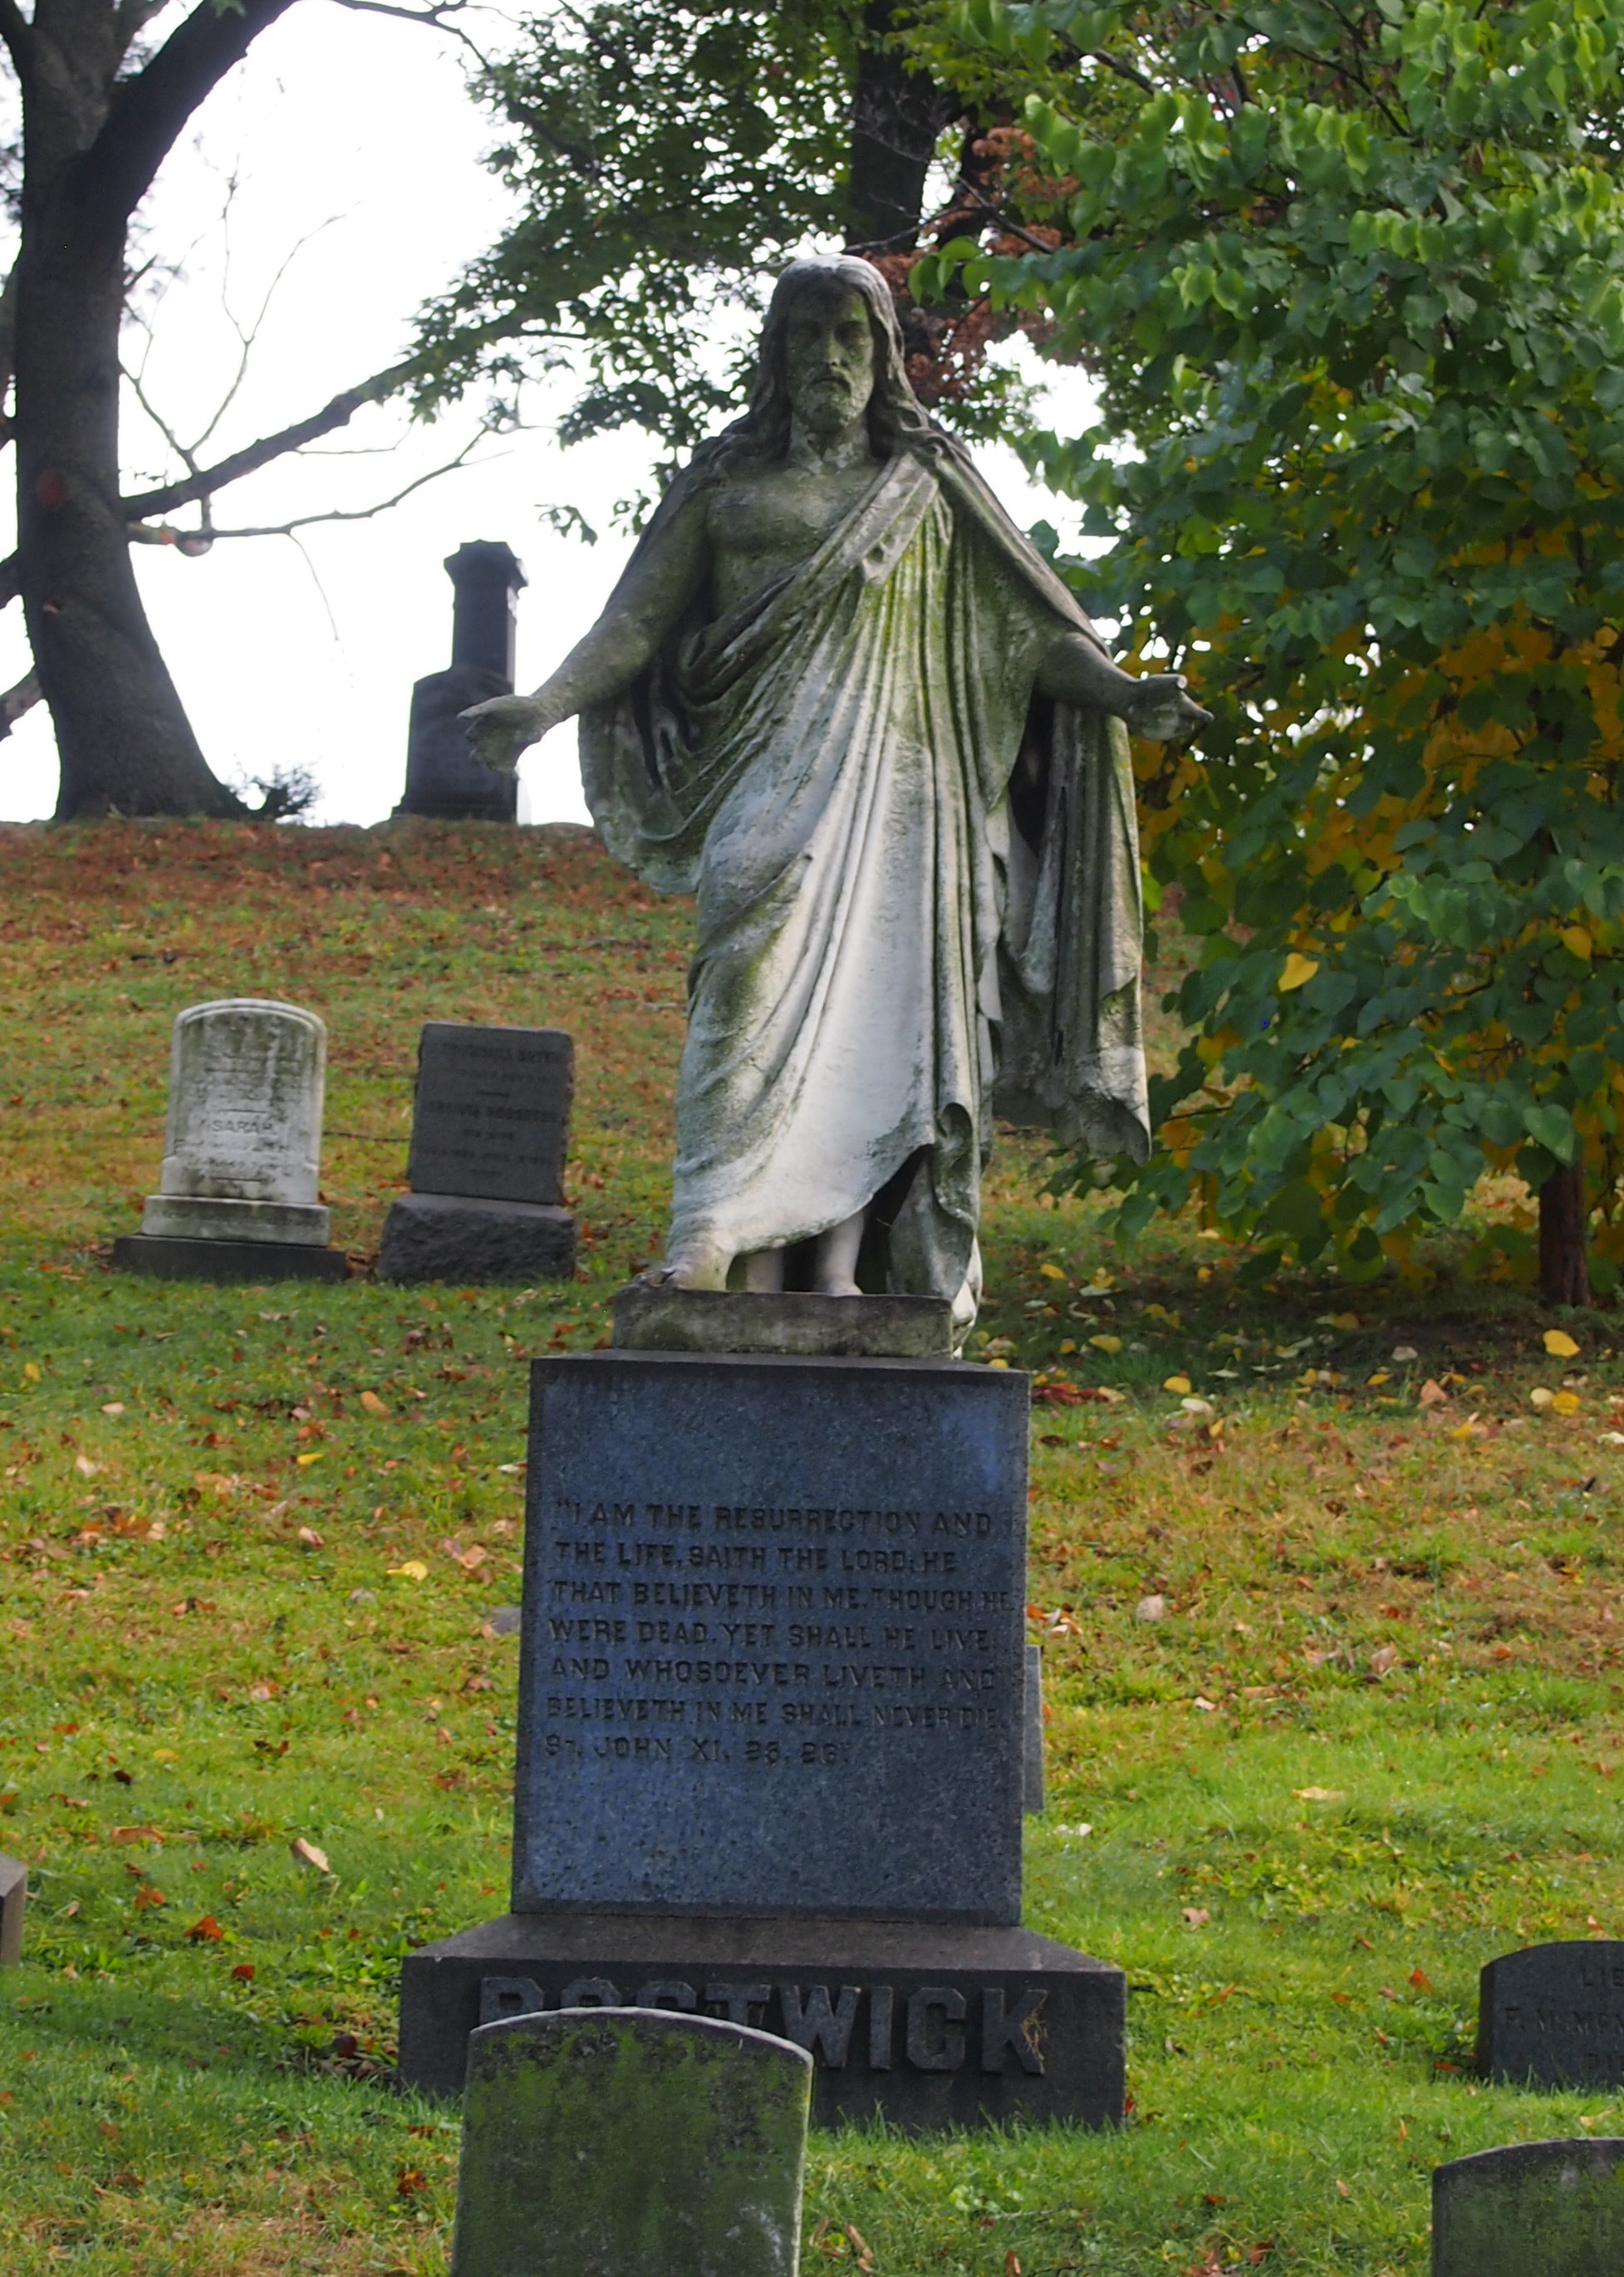 Green-Wood Cemetery, Oct 14, 2014